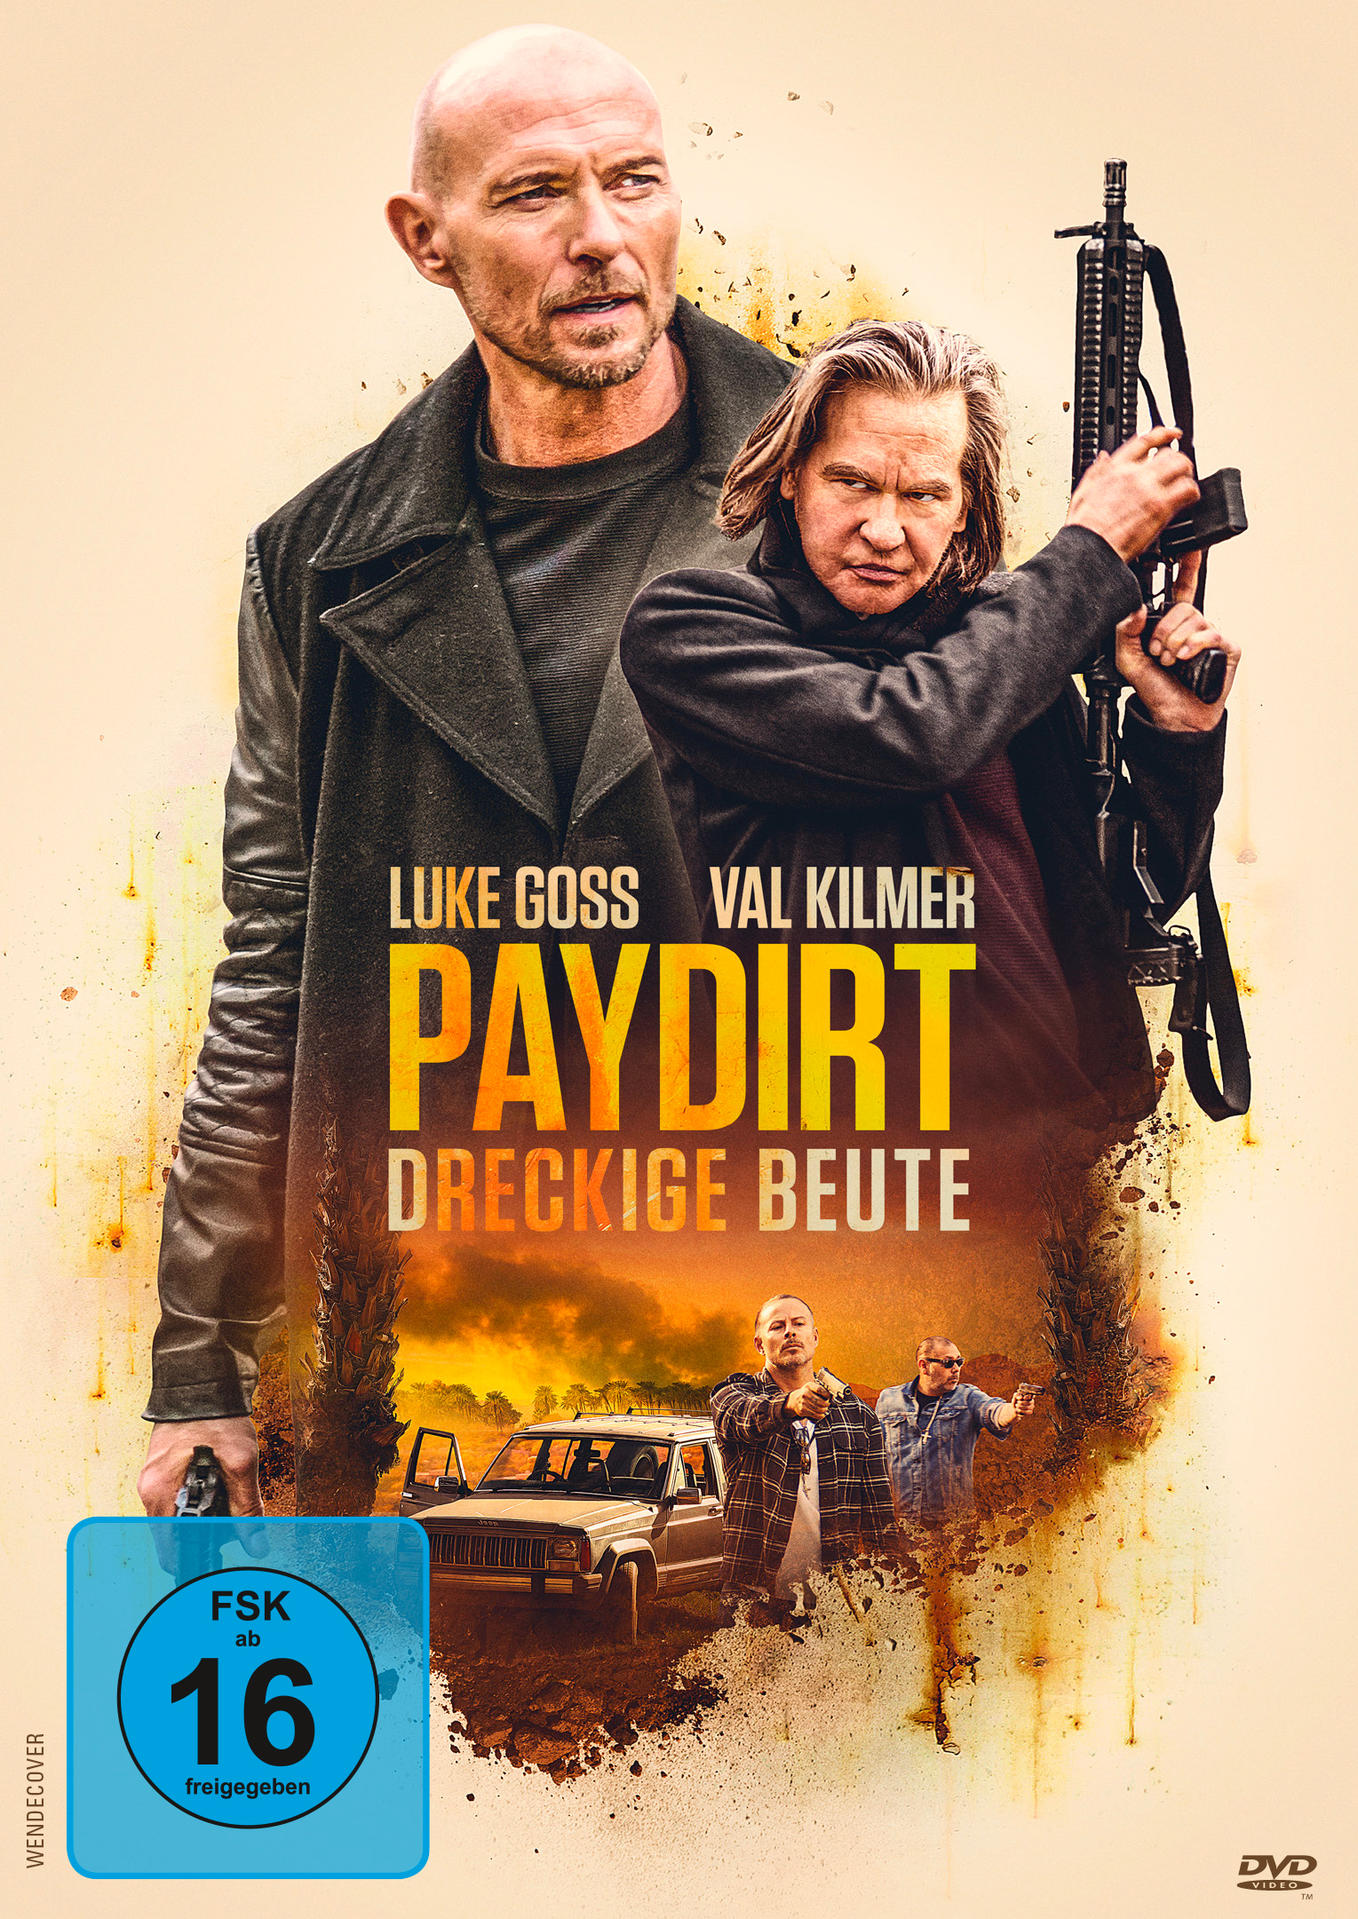 Dreckige - Paydirt DVD Beute